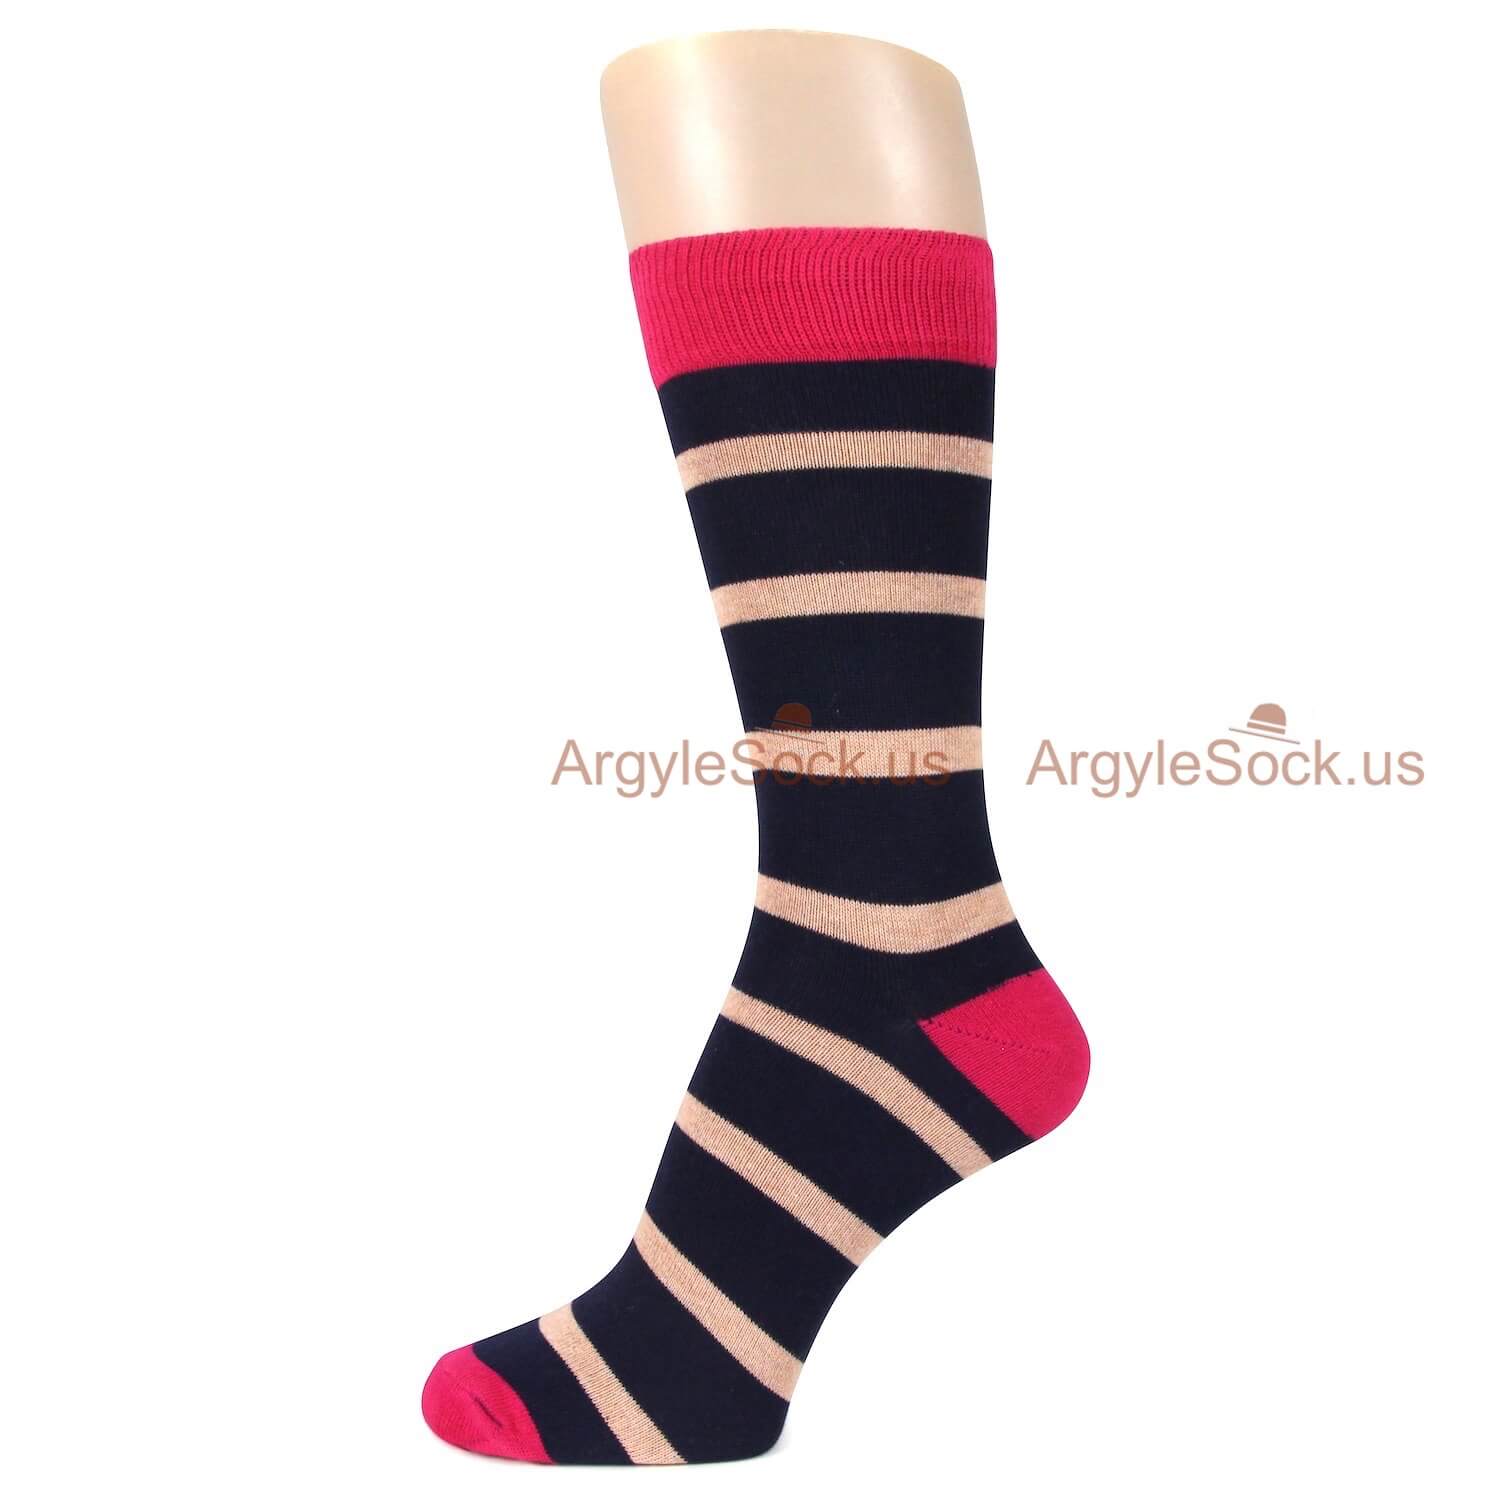 Black with Pink Stripe Socks For Men